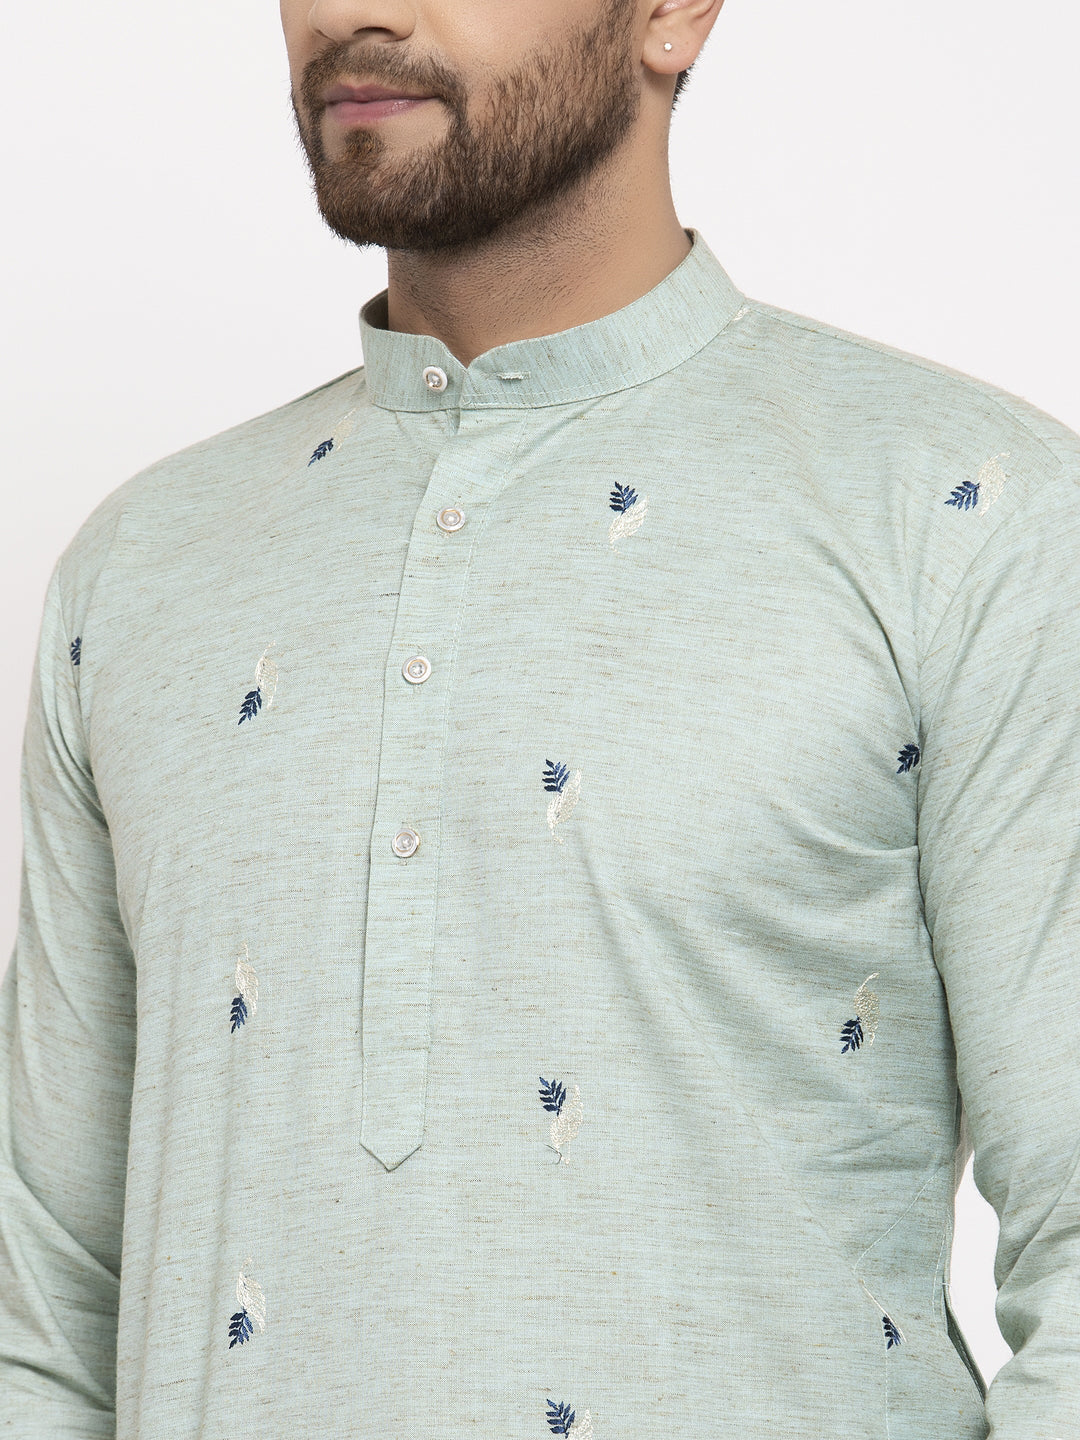 Men's Green Printed Cotton Kurta Payjama Sets ( JOKP 635 Green ) - Virat Fashions